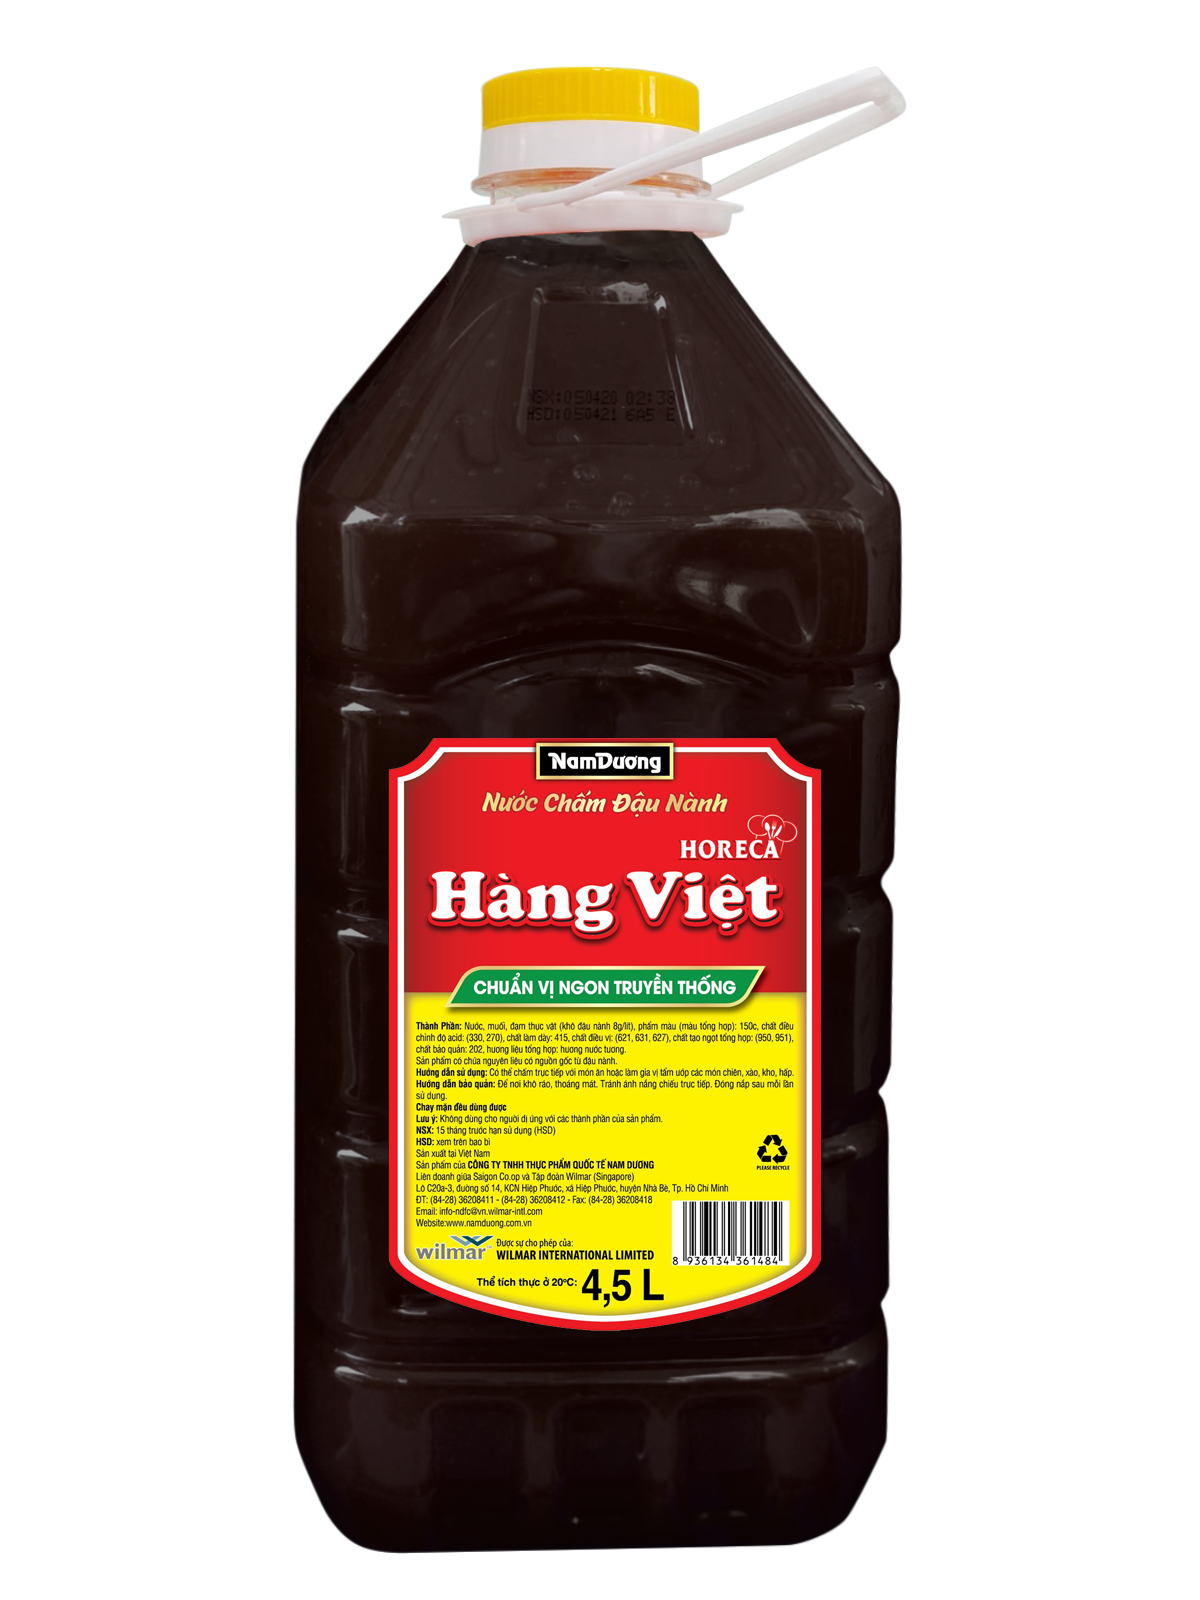 Hang Viet Horeca Soy Sauce